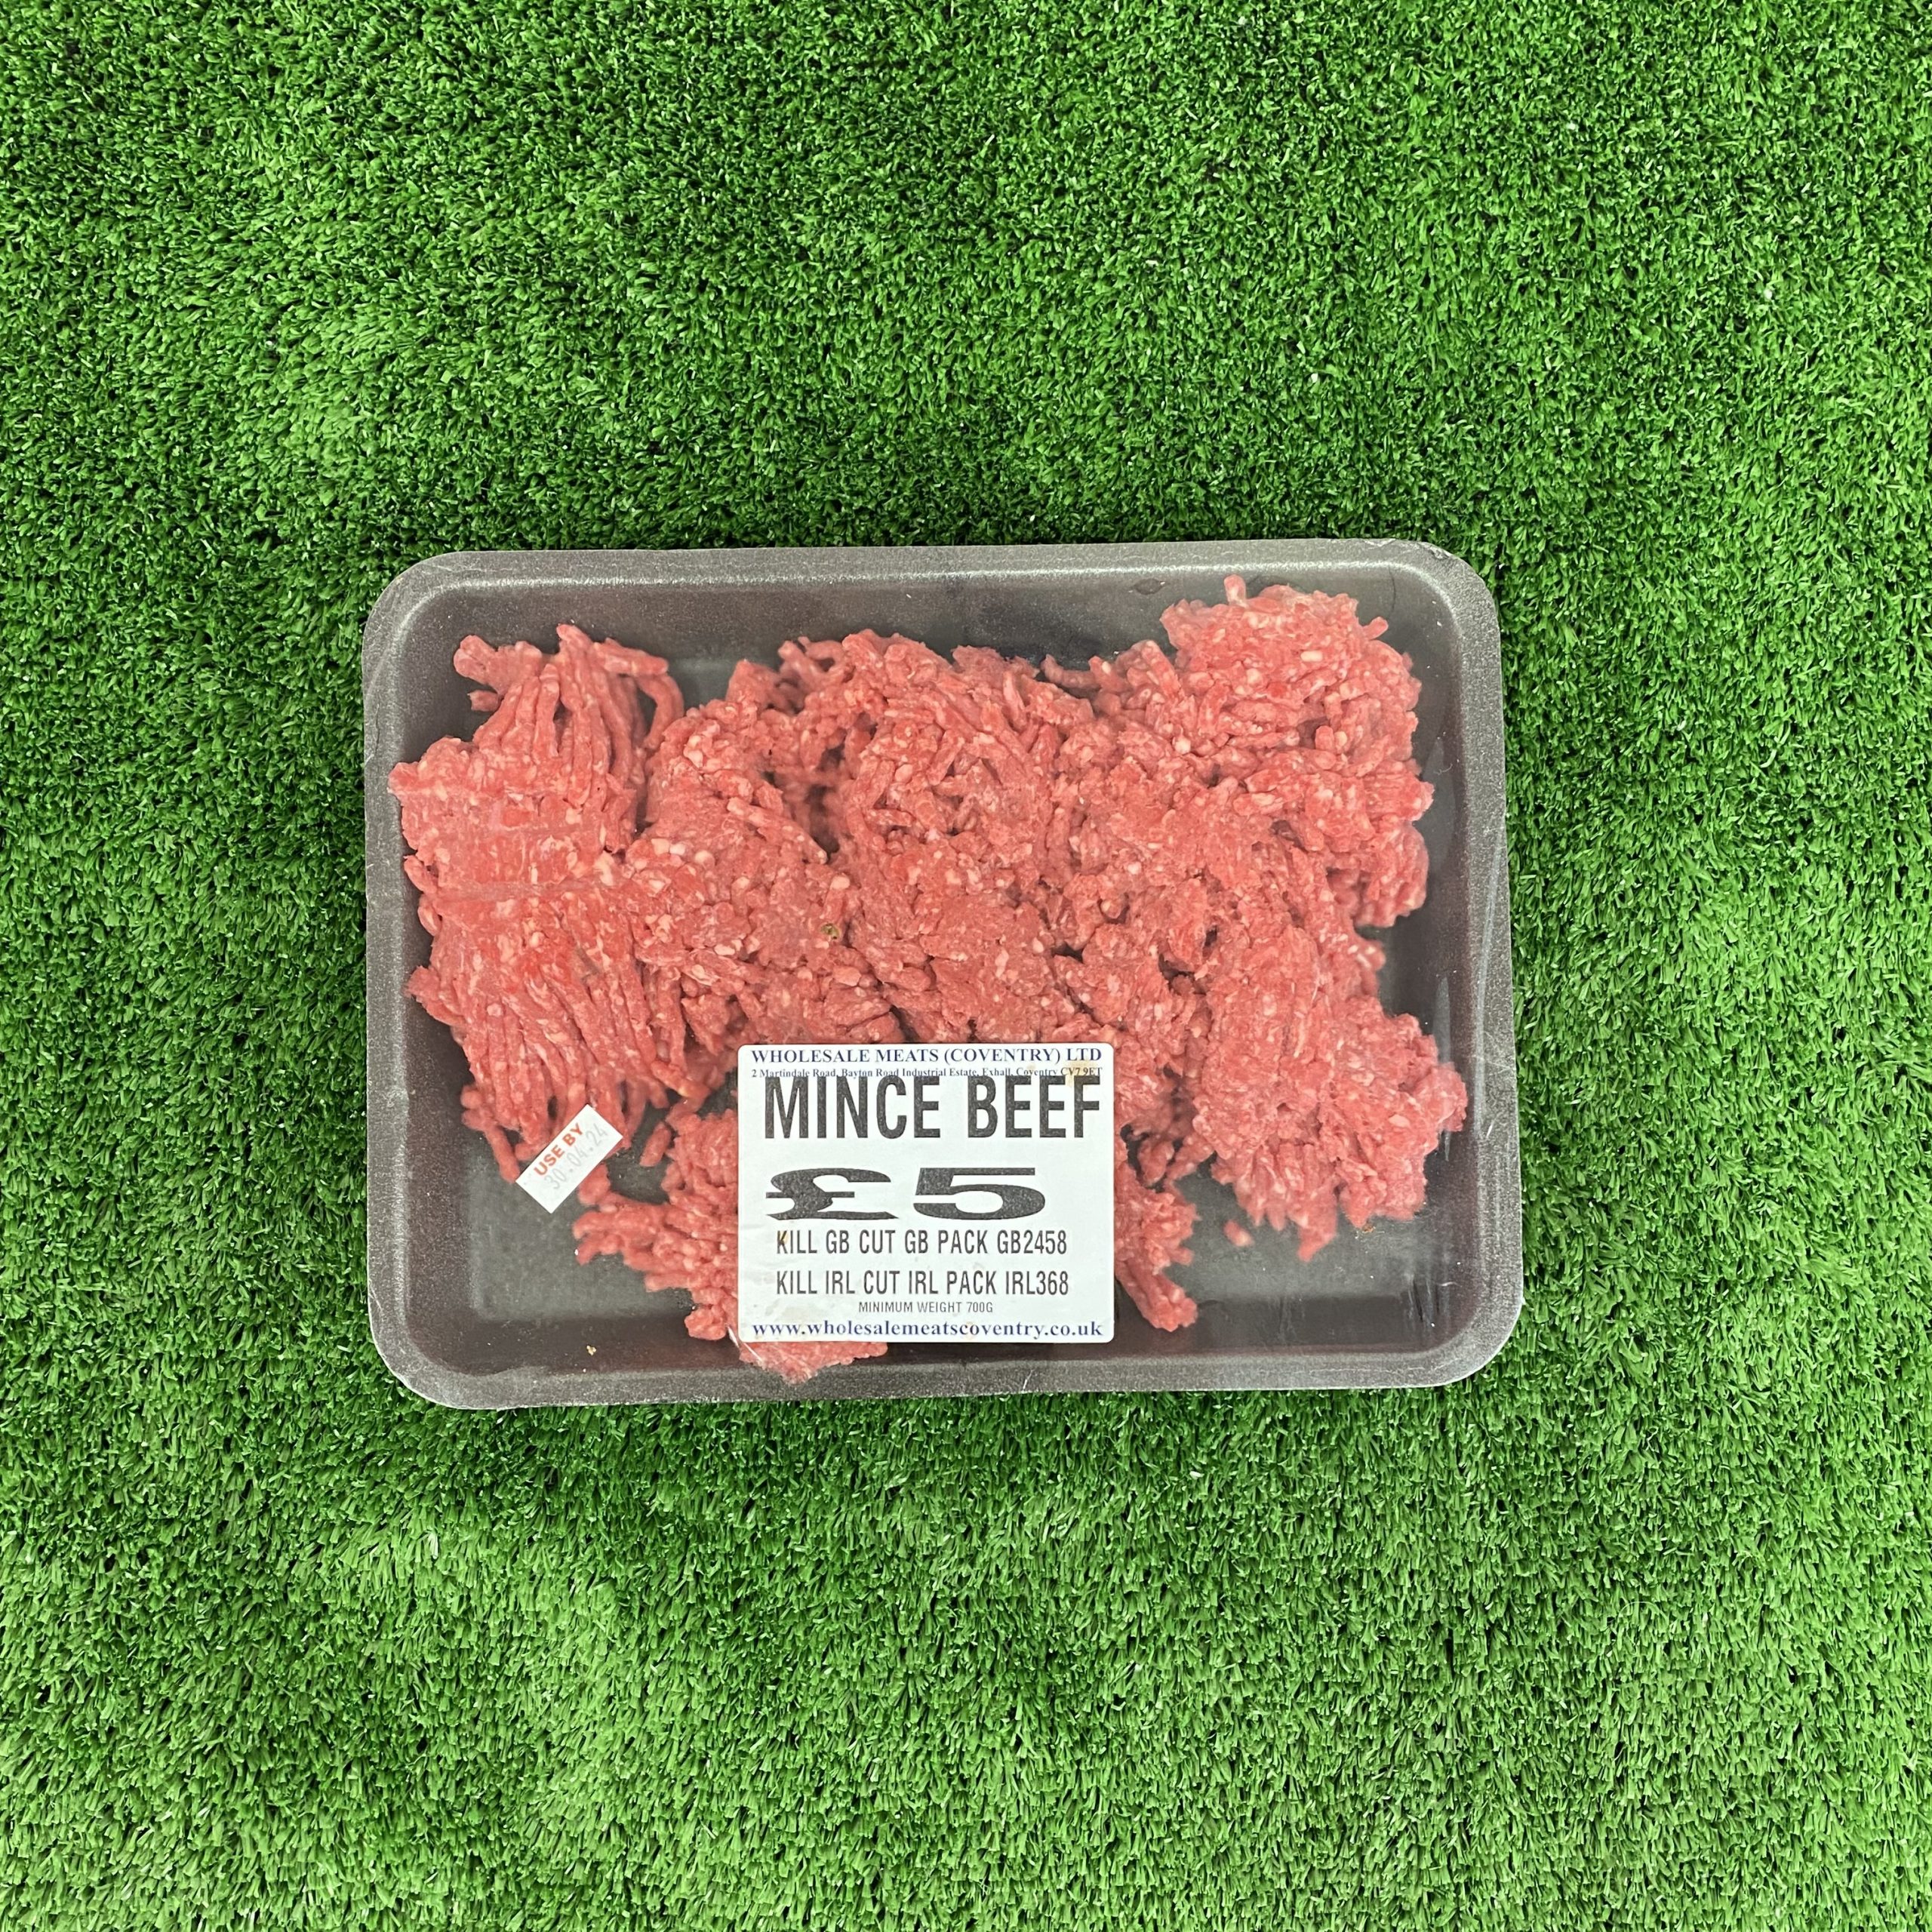 fresh mince beef (best seller) - Wholesale Meats (Coventry) Ltd